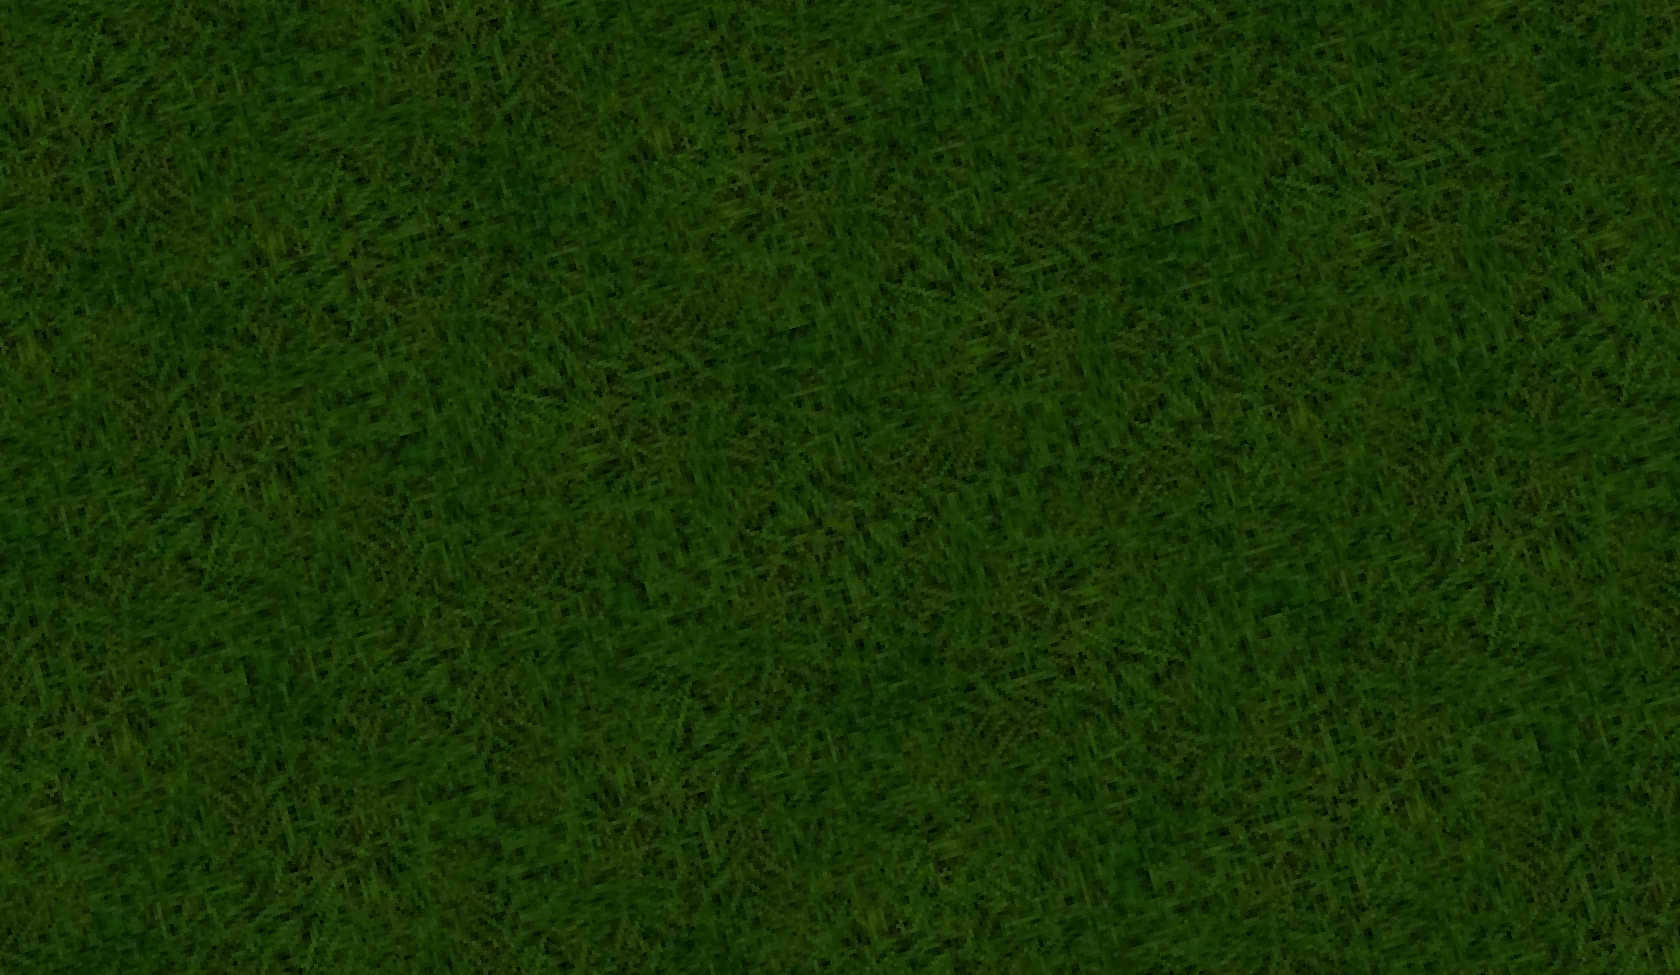 текстура травы из гта 5 фото 23